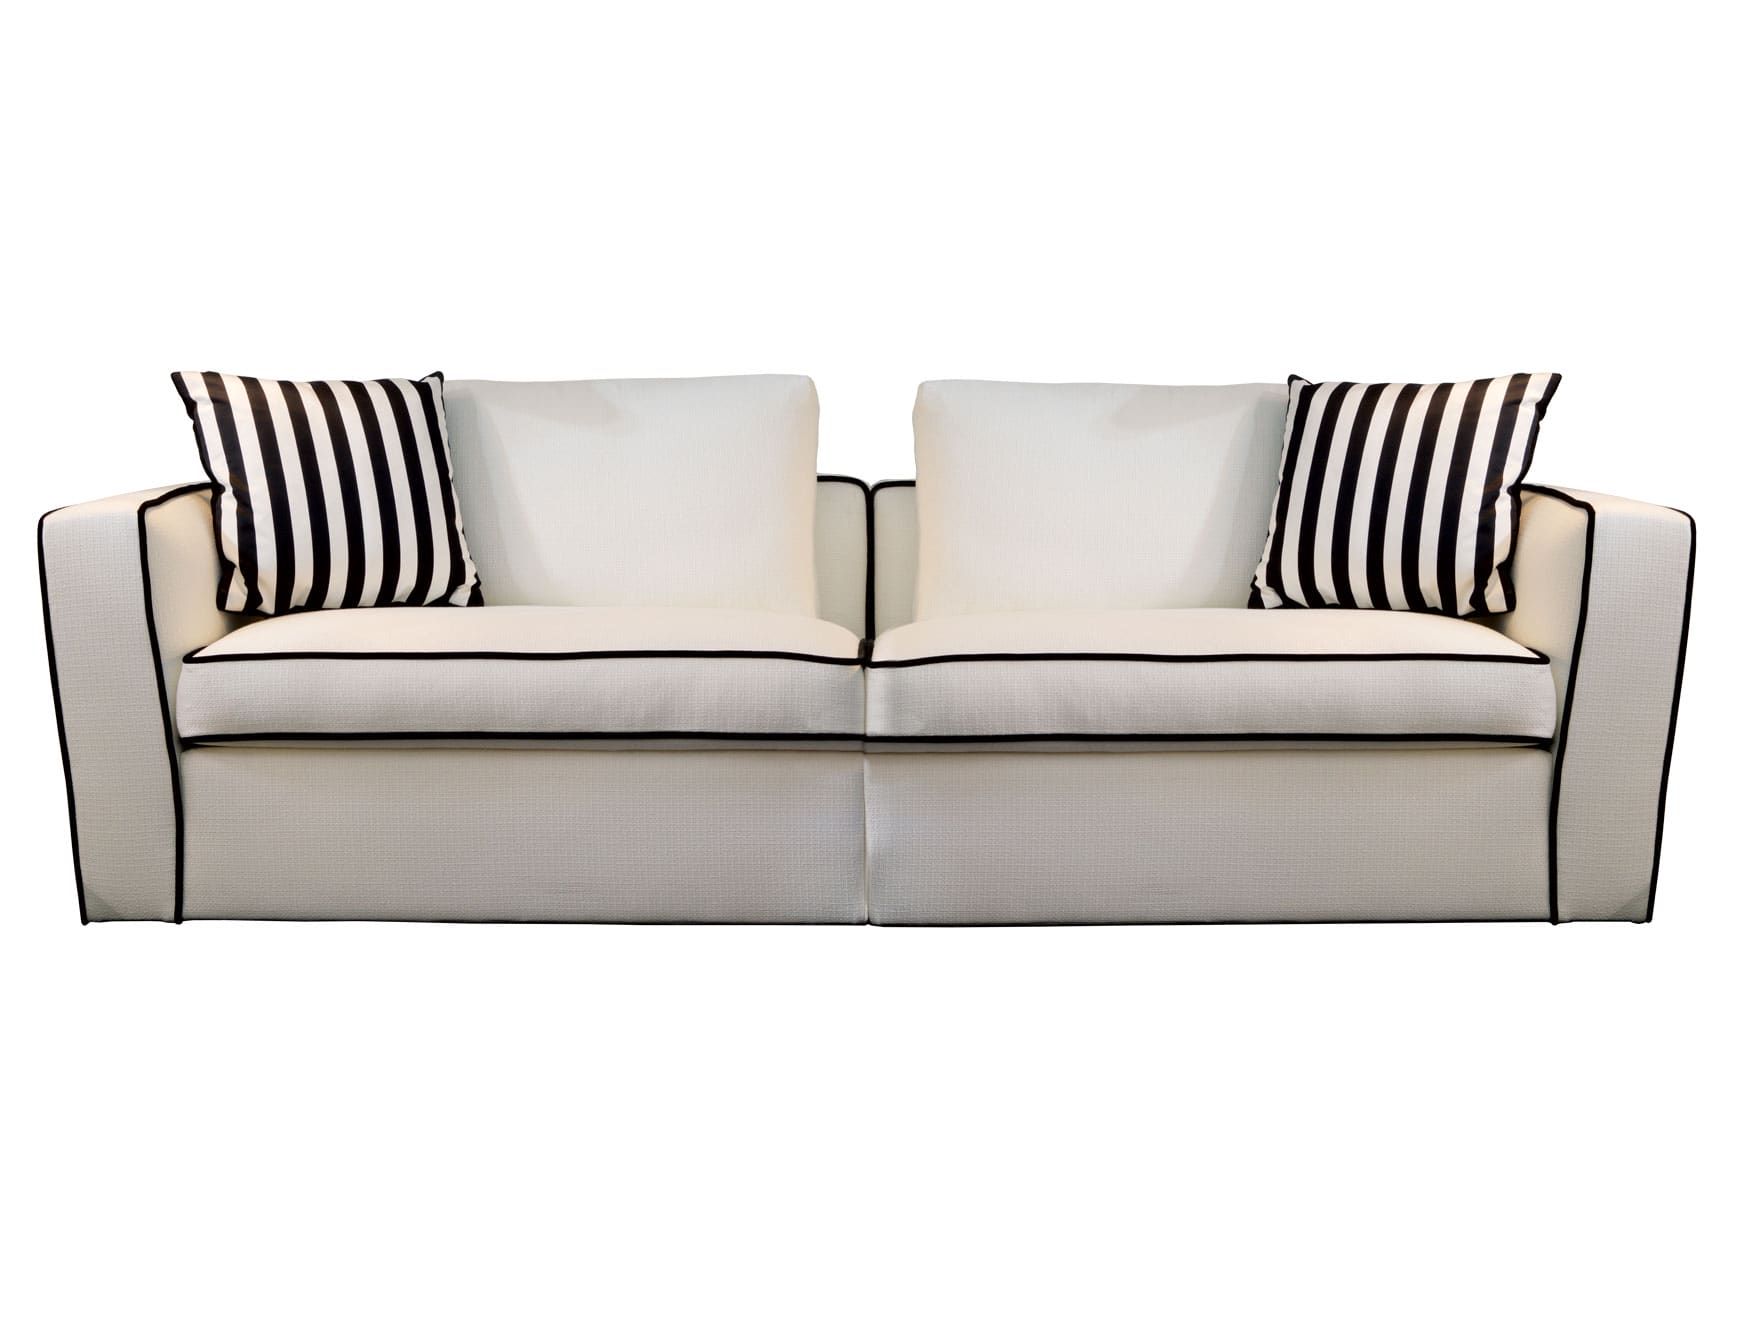 Alexander modern Italian sofa chair with ivory leather